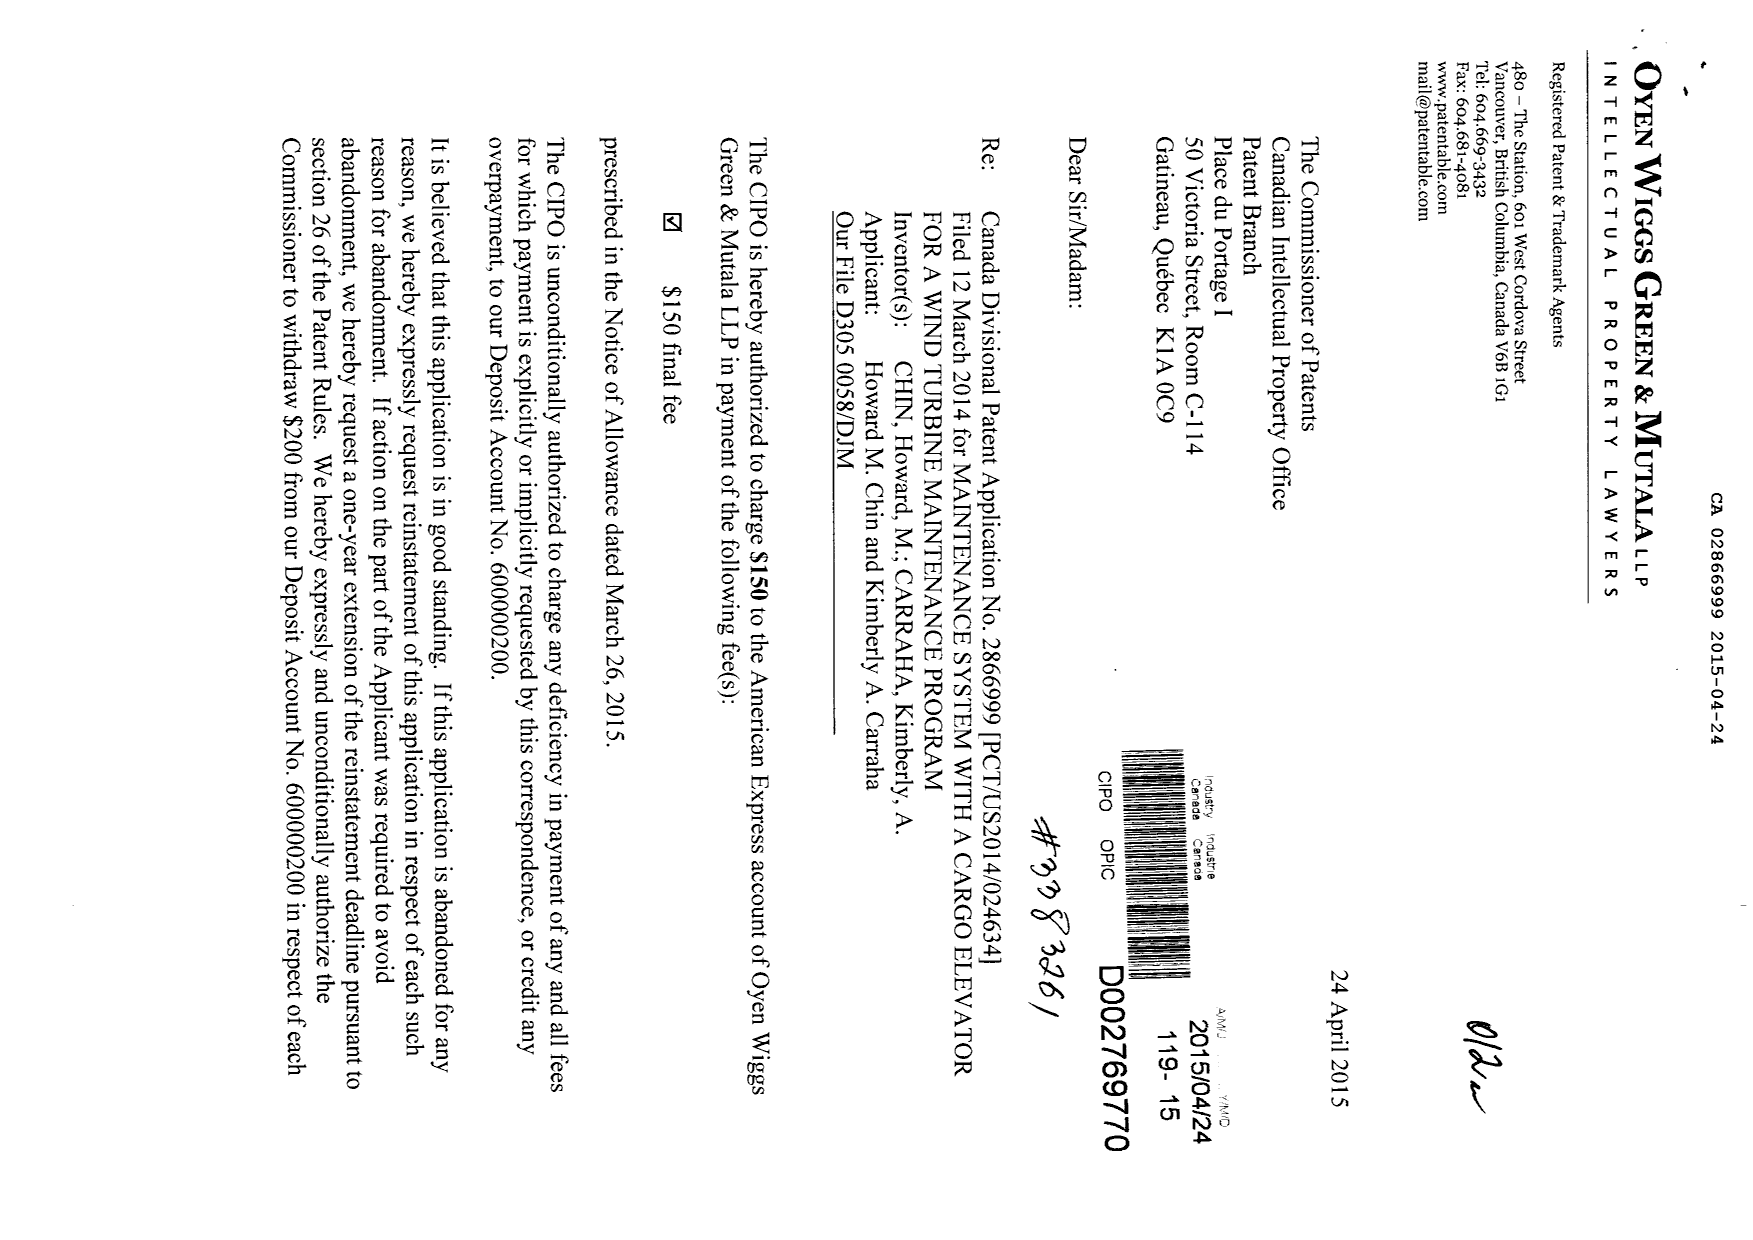 Canadian Patent Document 2866999. Correspondence 20141224. Image 1 of 2